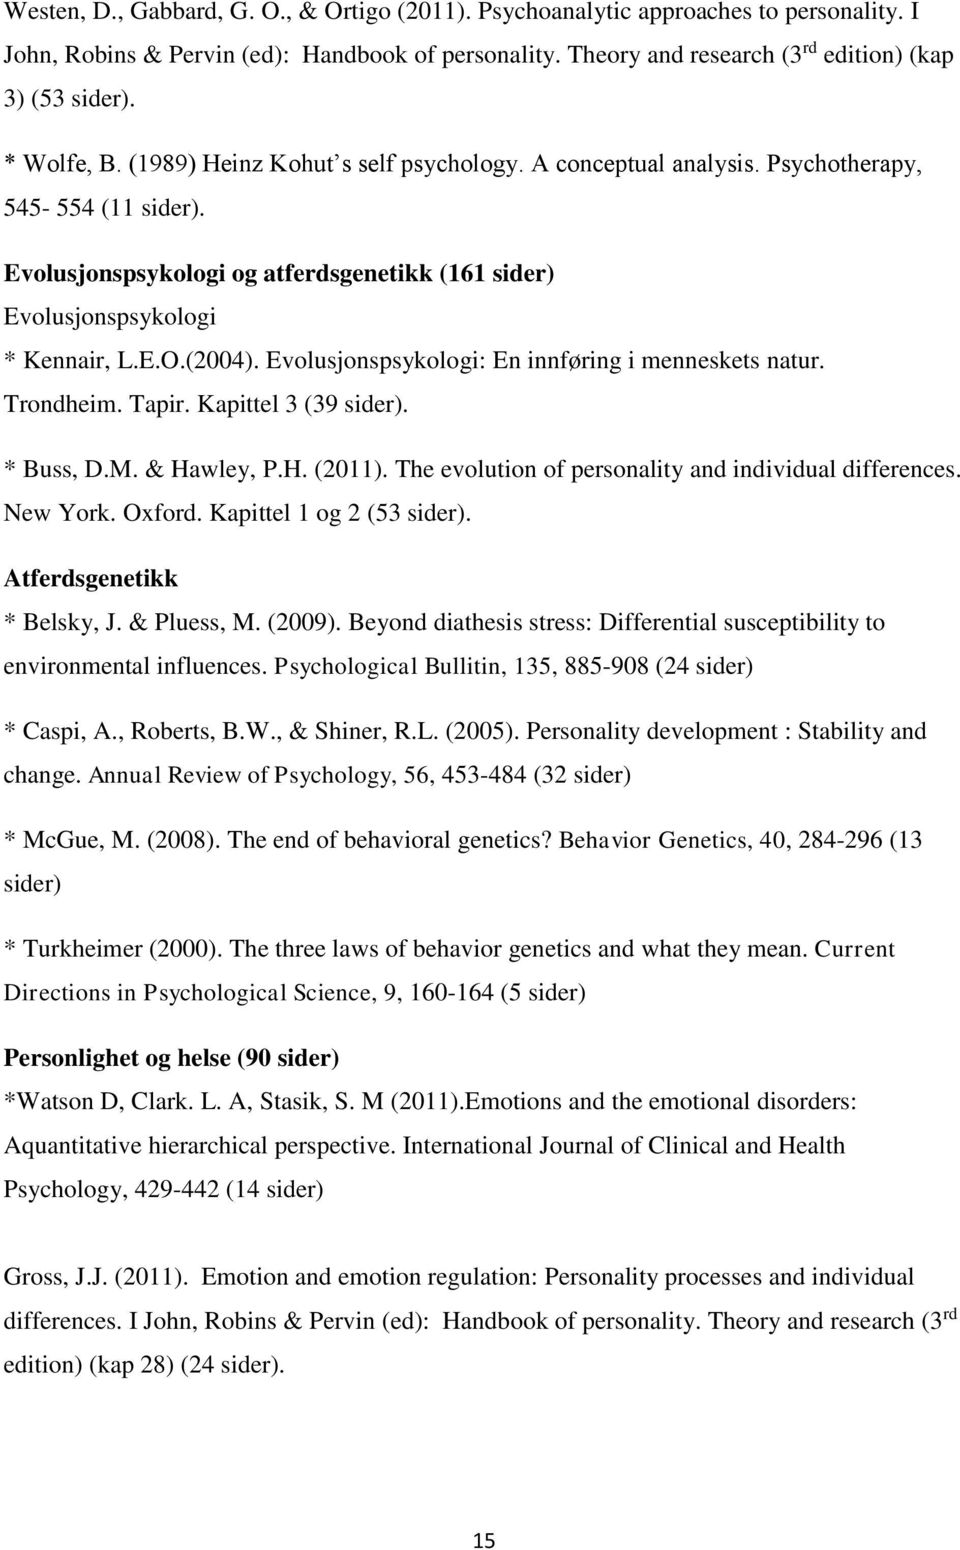 (2004). Evolusjonspsykologi: En innføring i menneskets natur. Trondheim. Tapir. Kapittel 3 (39 sider). * Buss, D.M. & Hawley, P.H. (2011). The evolution of personality and individual differences.